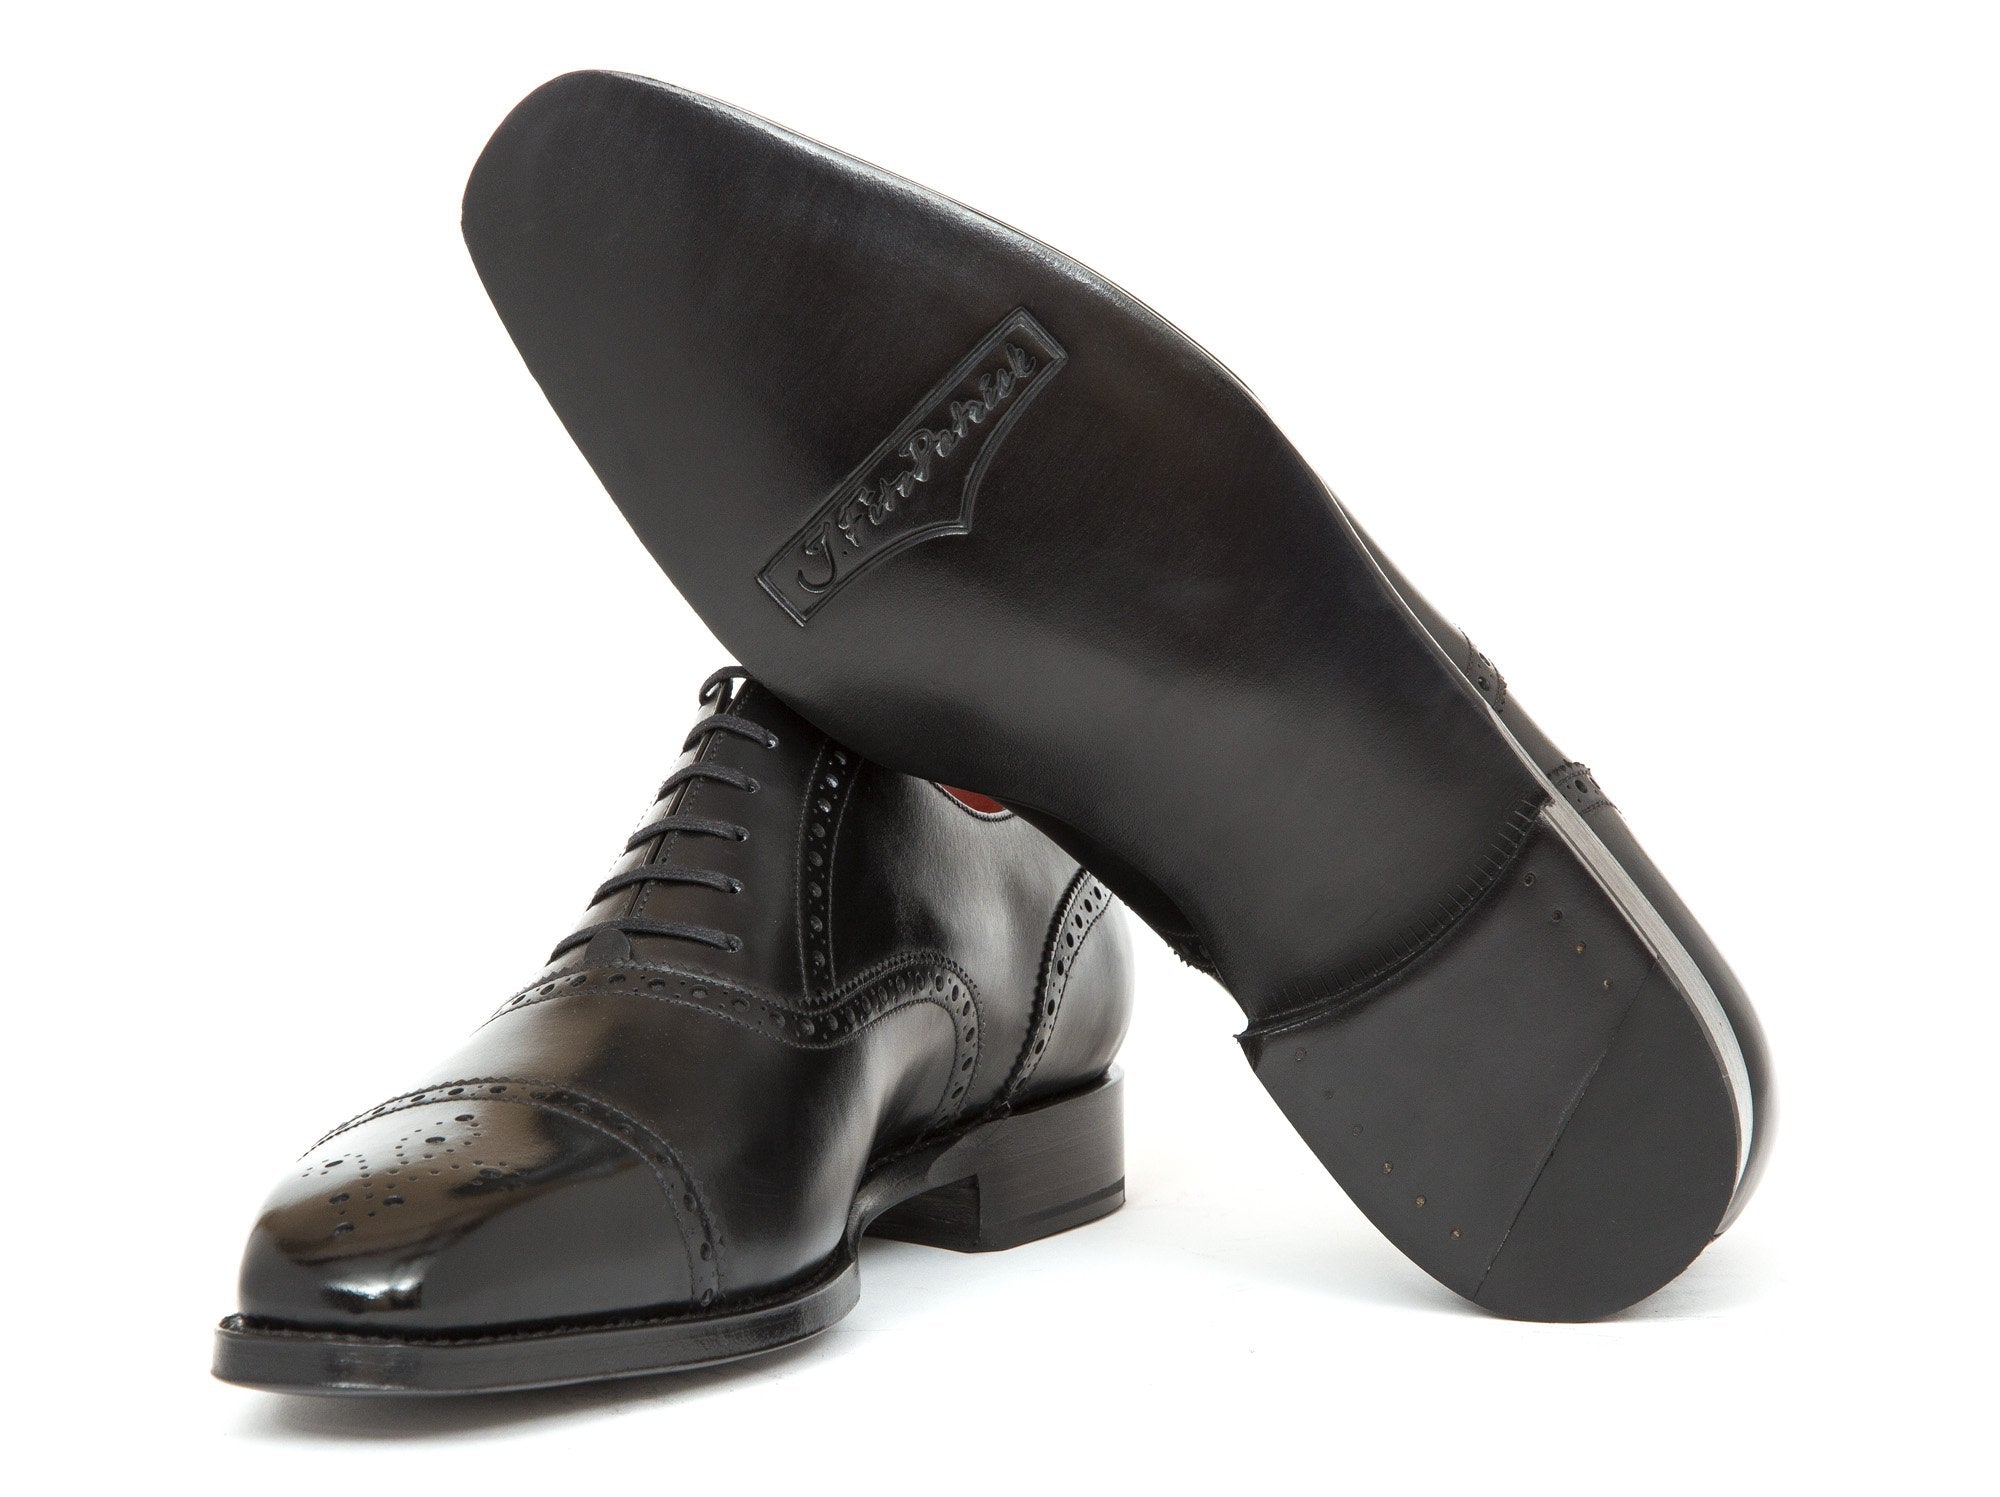 J.FitzPatrick Footwear - Windermere - Black Calf - MGF Last